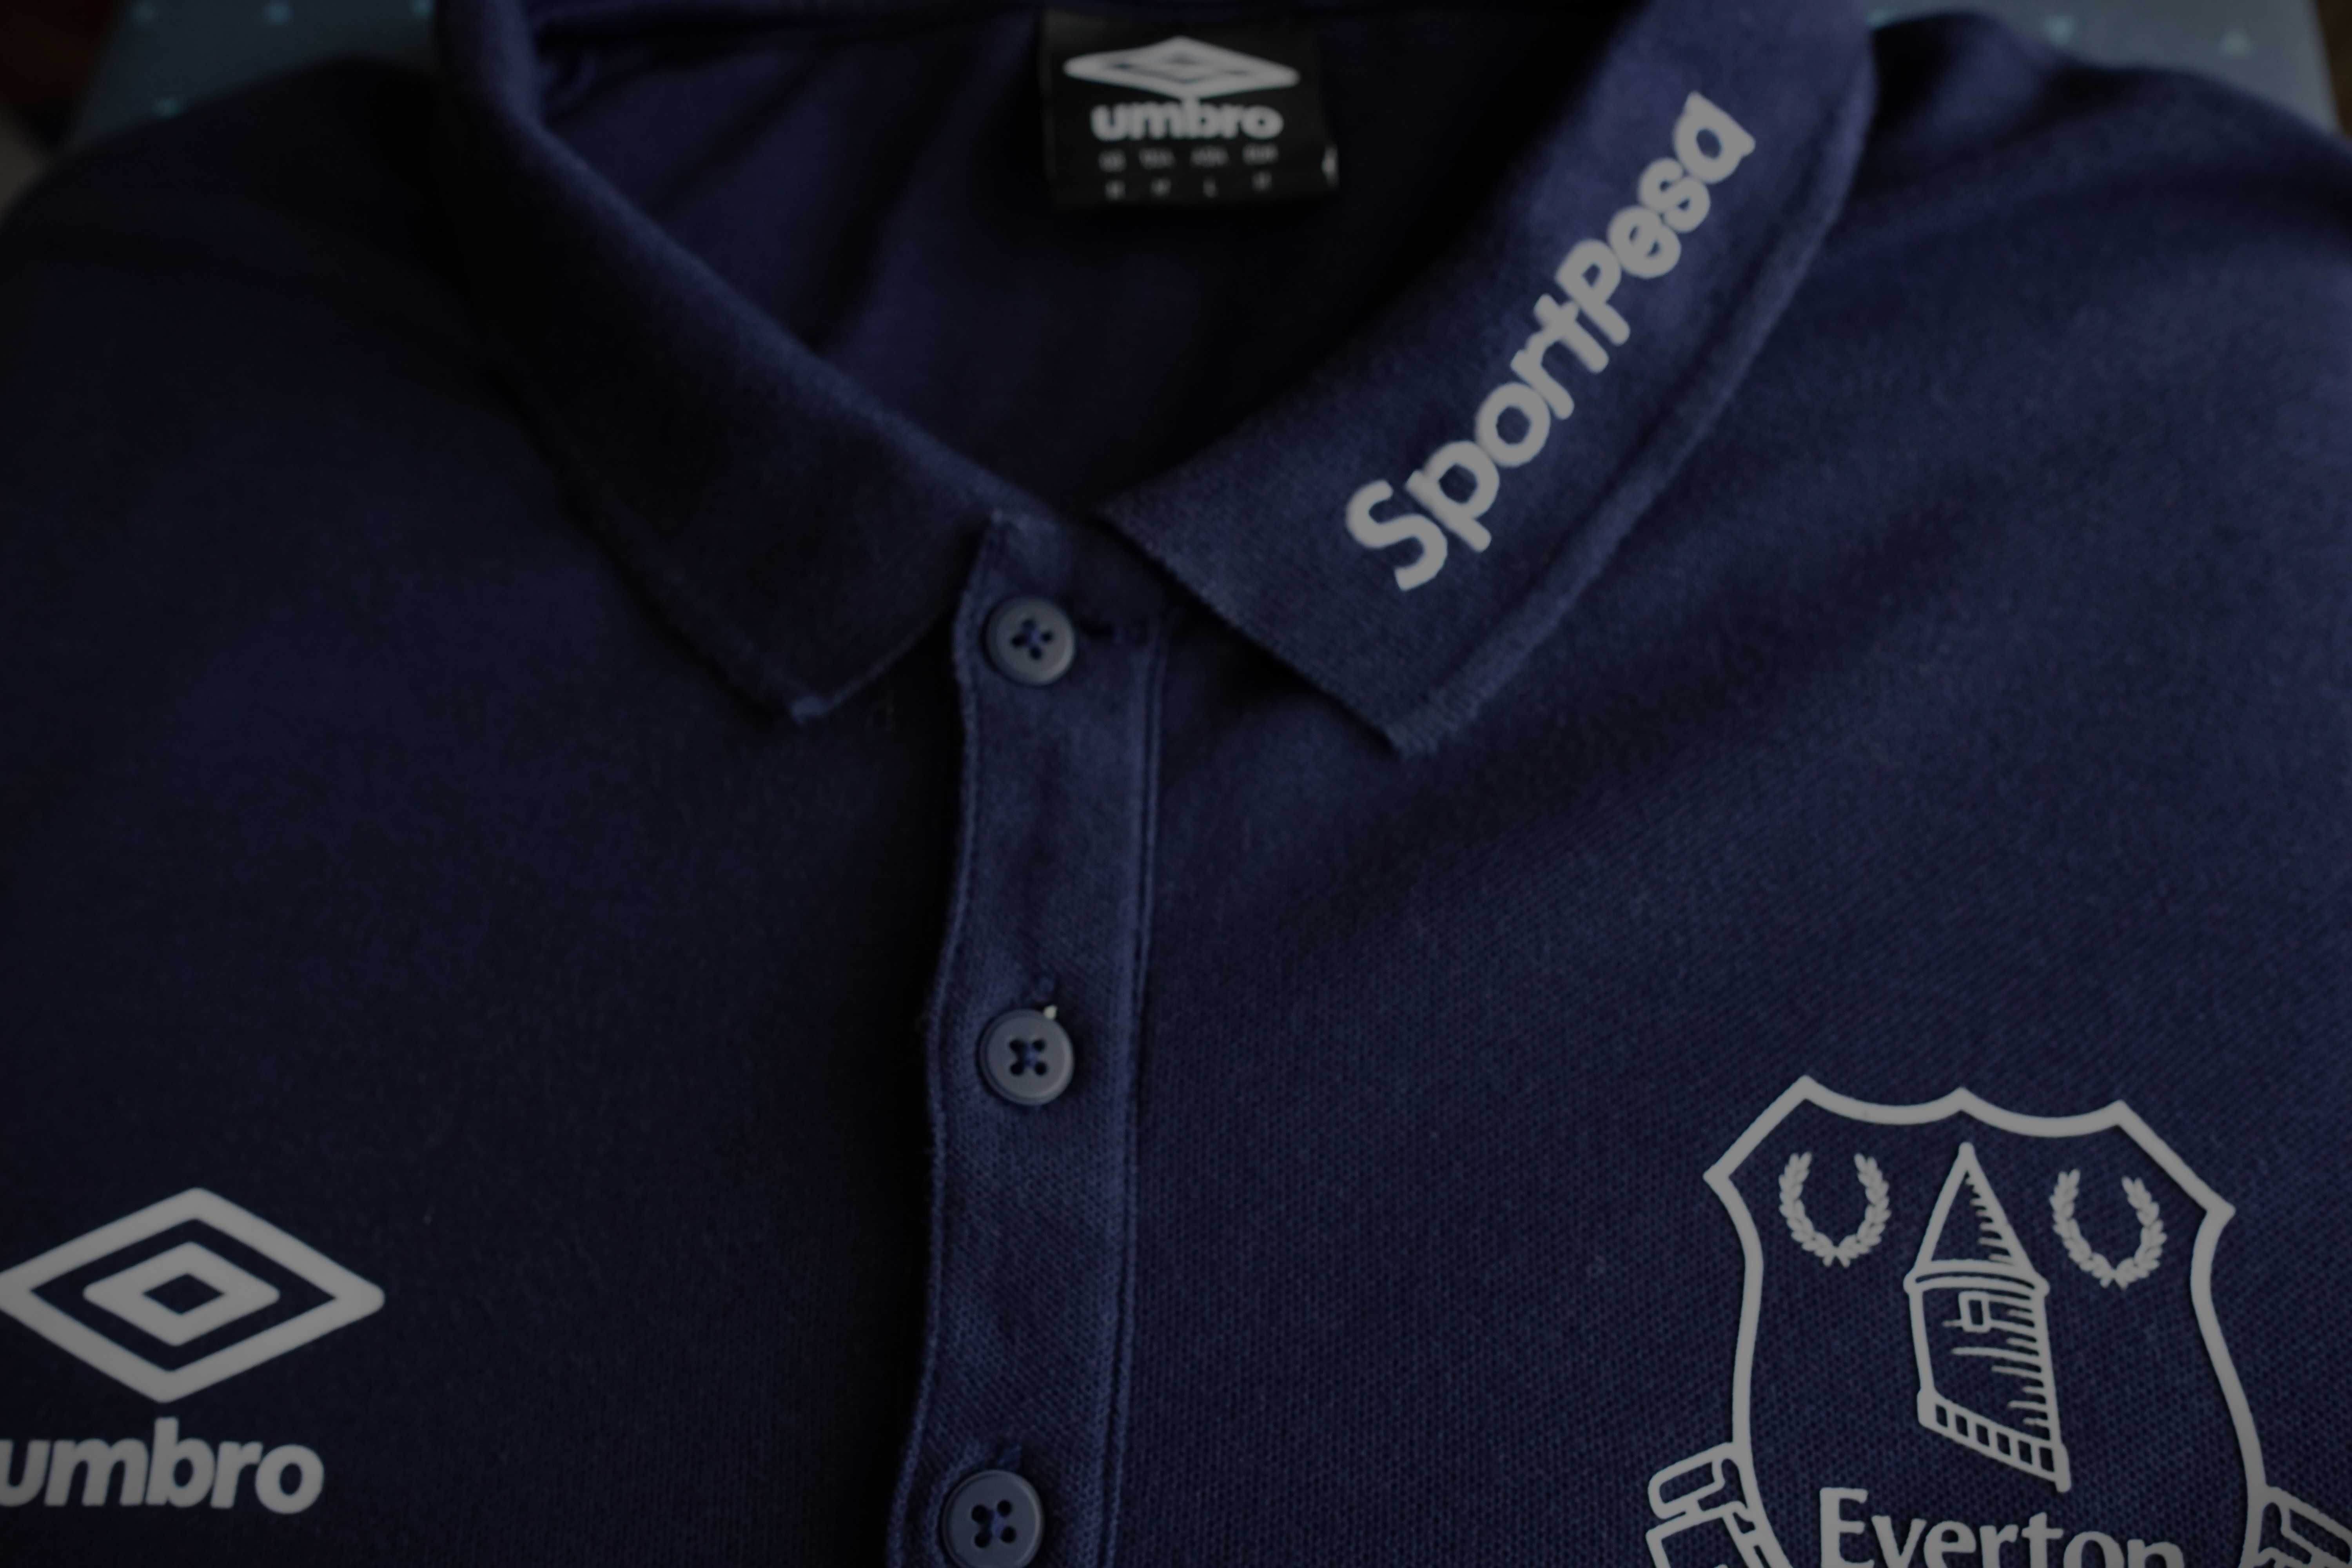 polo t-shirt Everton FC Liverpool Umbro